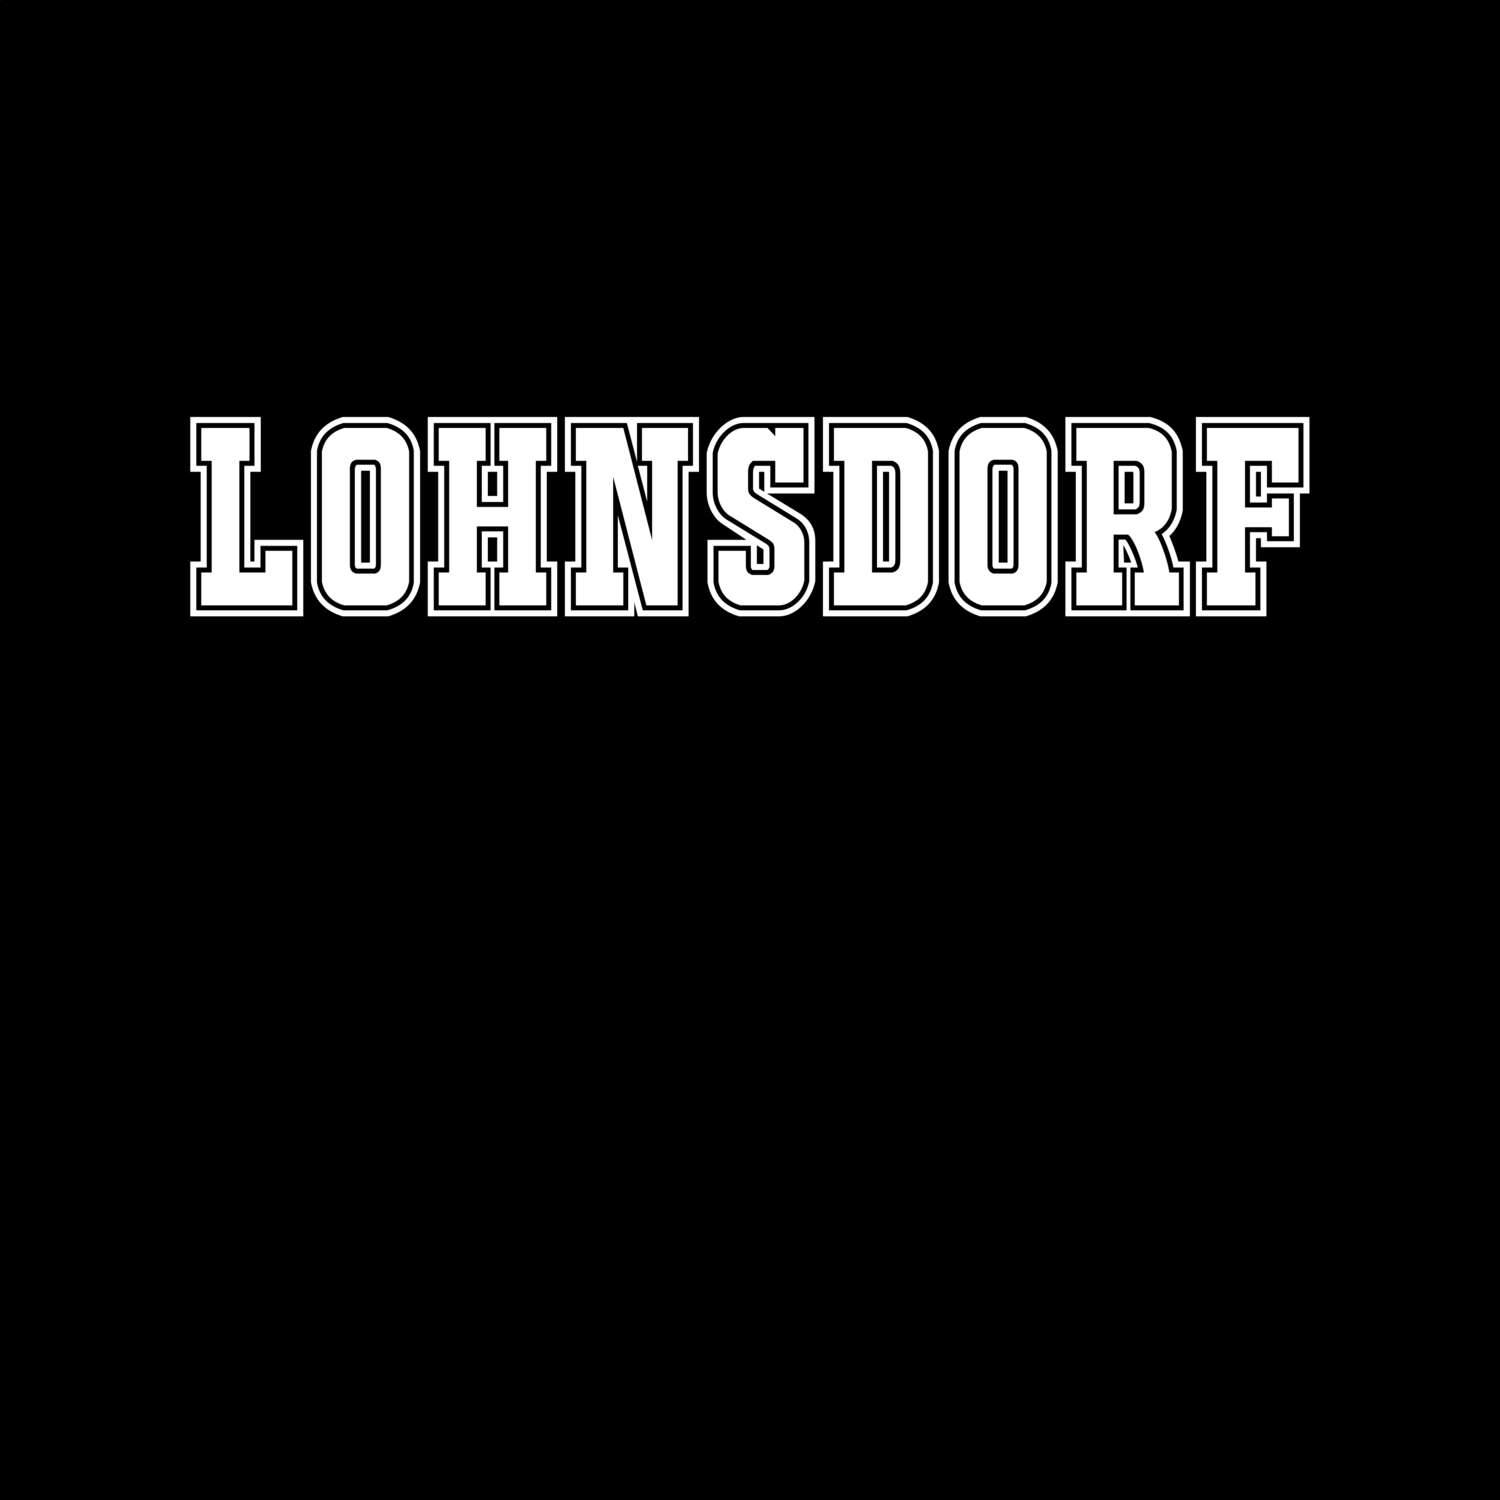 Lohnsdorf T-Shirt »Classic«